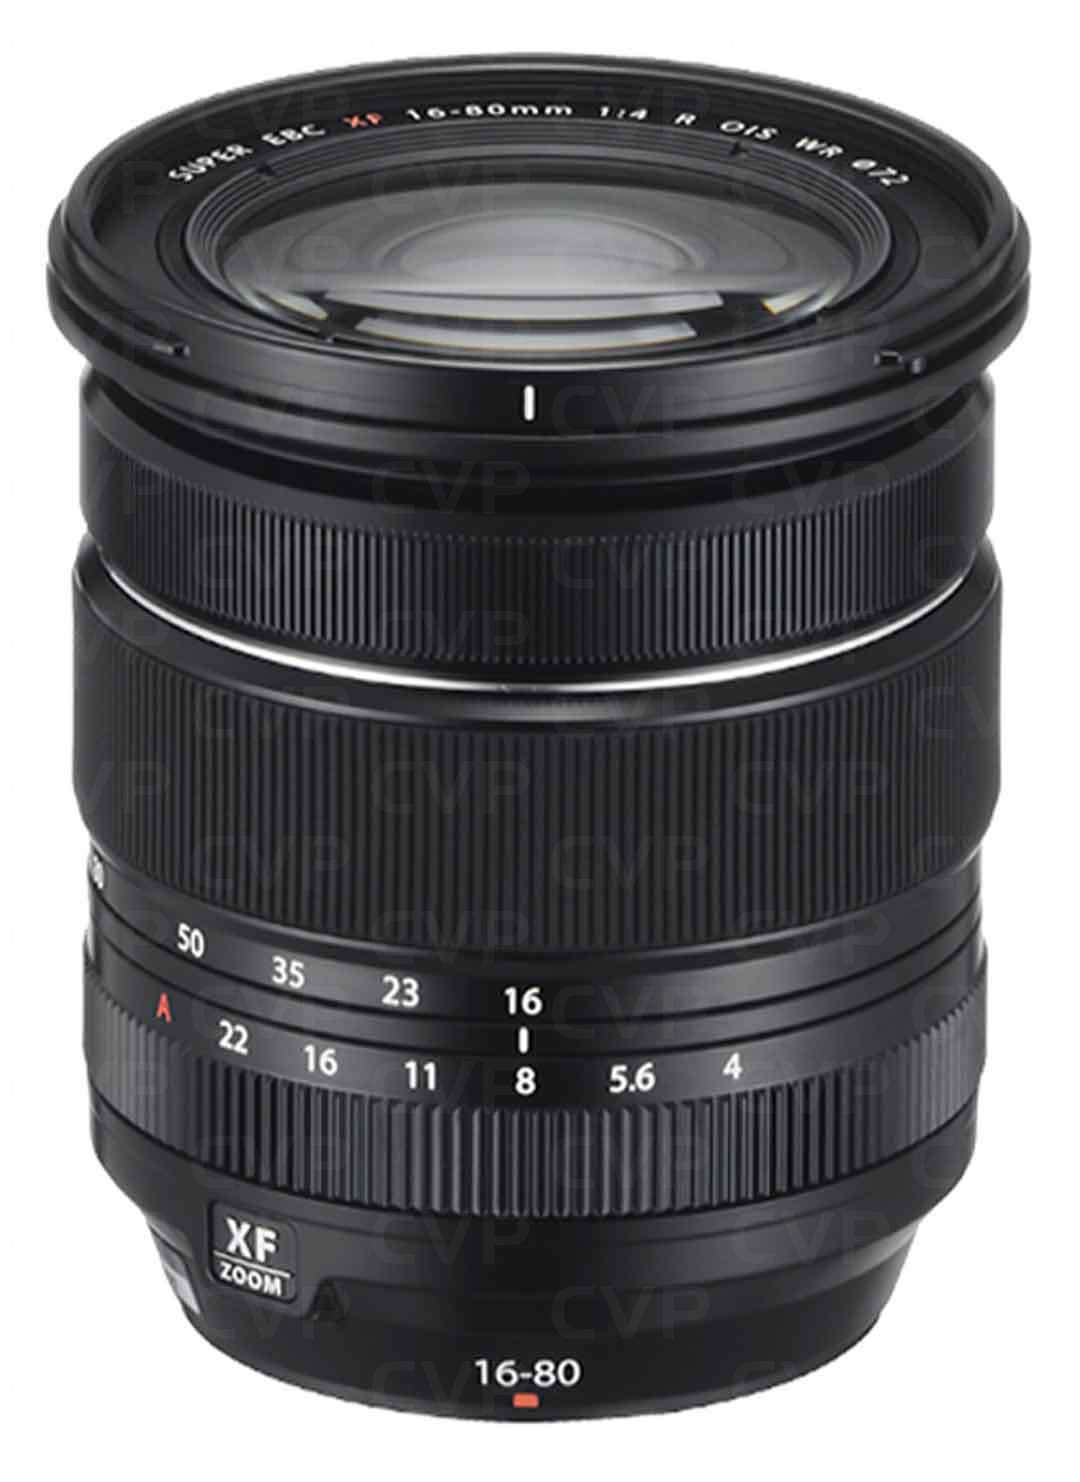 Buy - Fujifilm XF 16-80mm F4 R OIS WR Lens with Optical Image